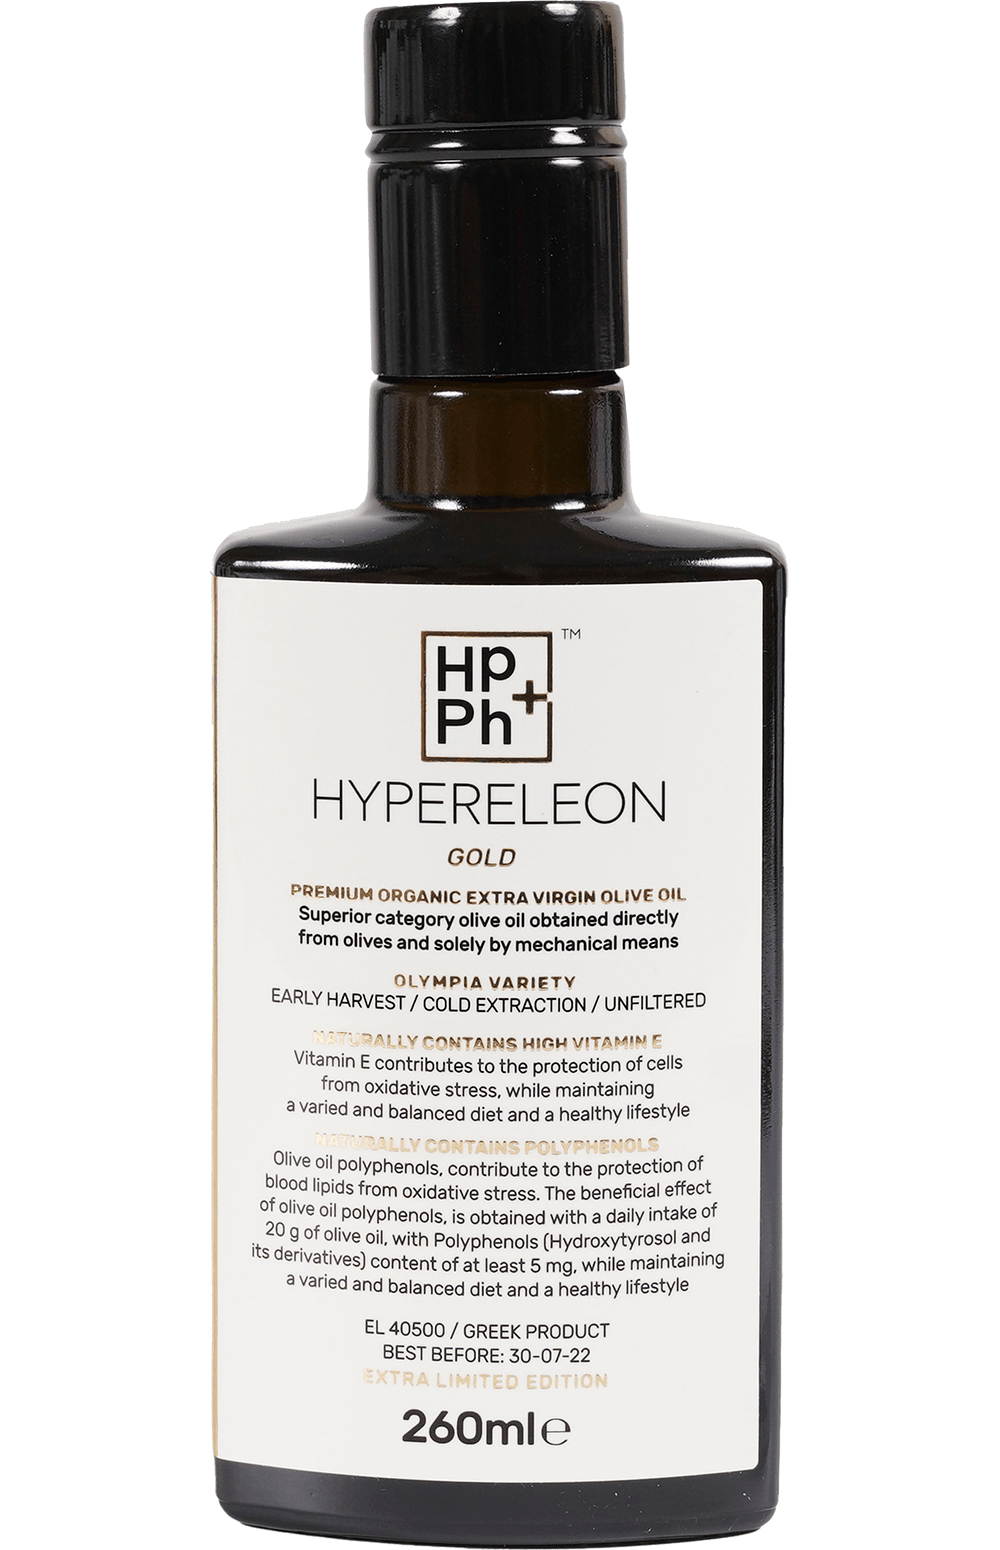 Hypereleon Gold- The Golden Juice